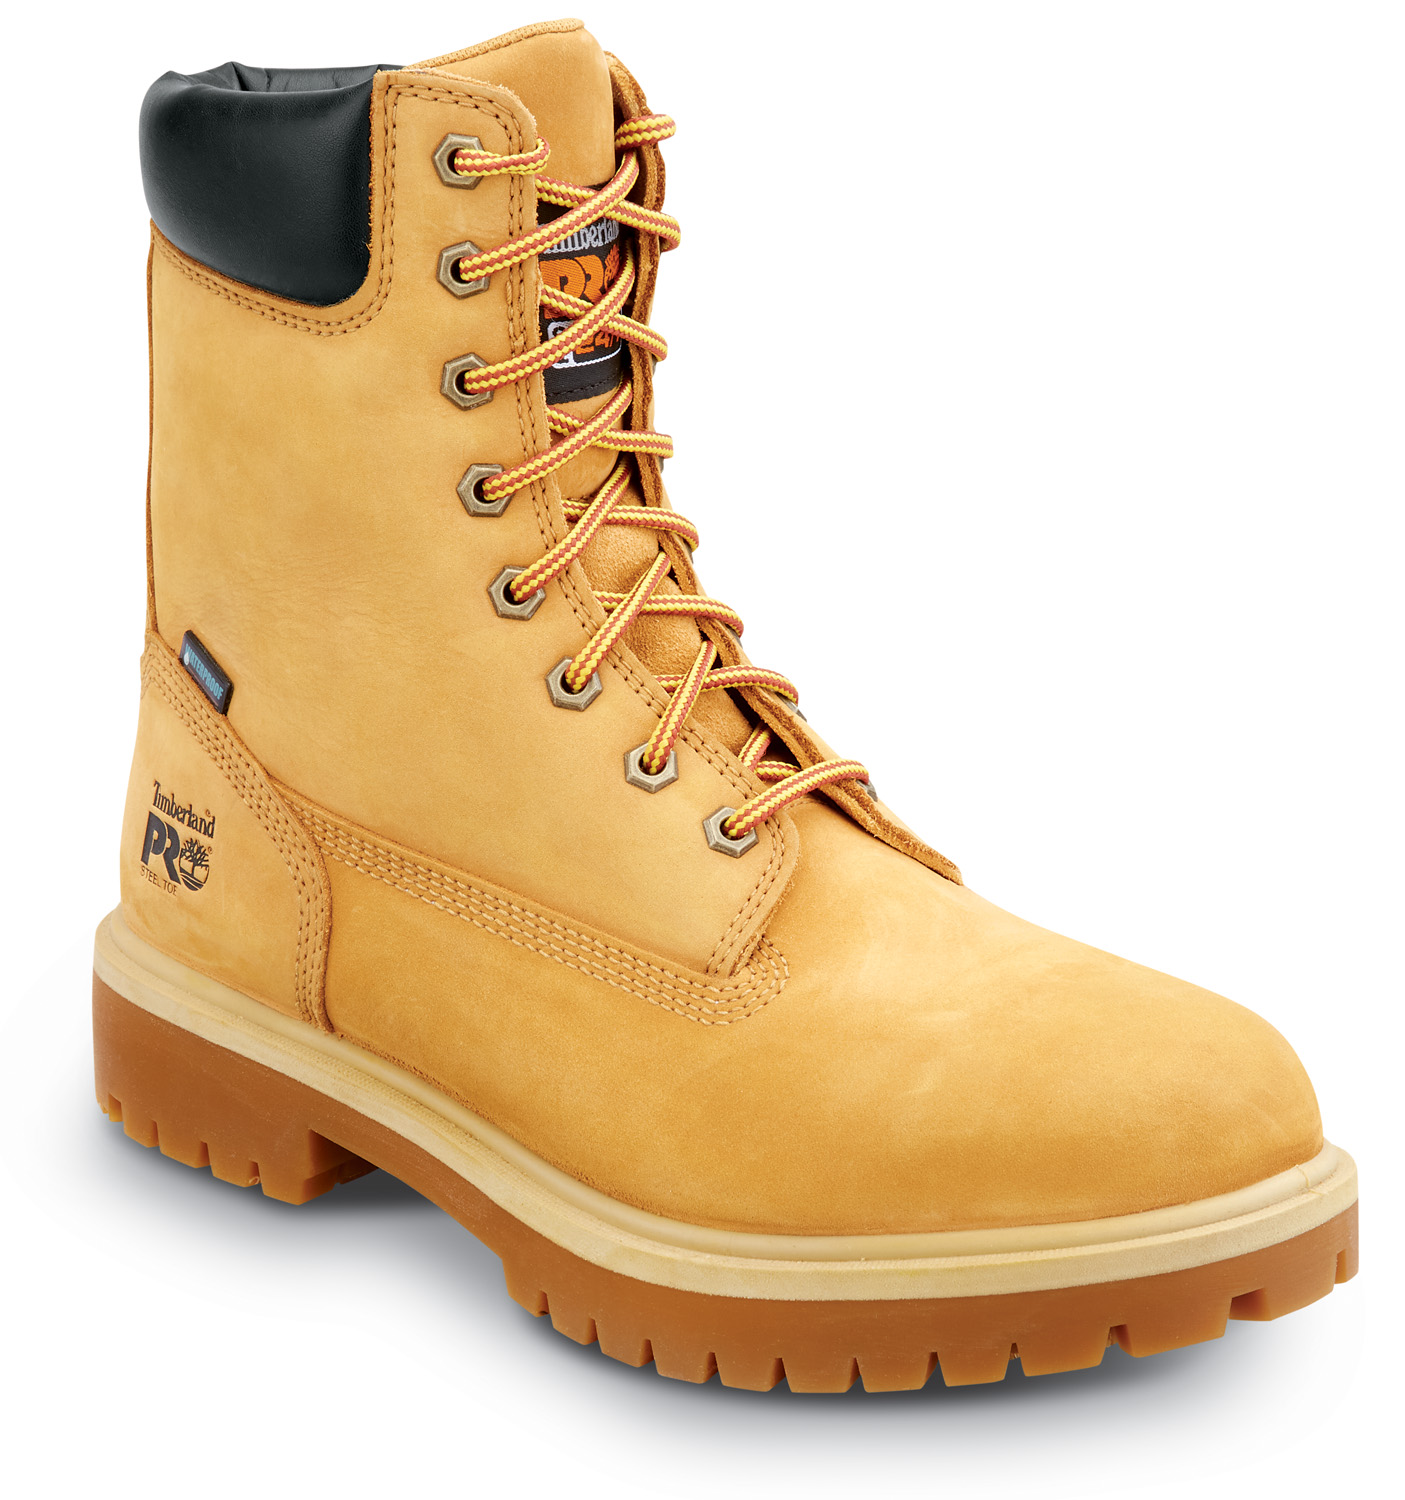 timberland pro steel toe boots